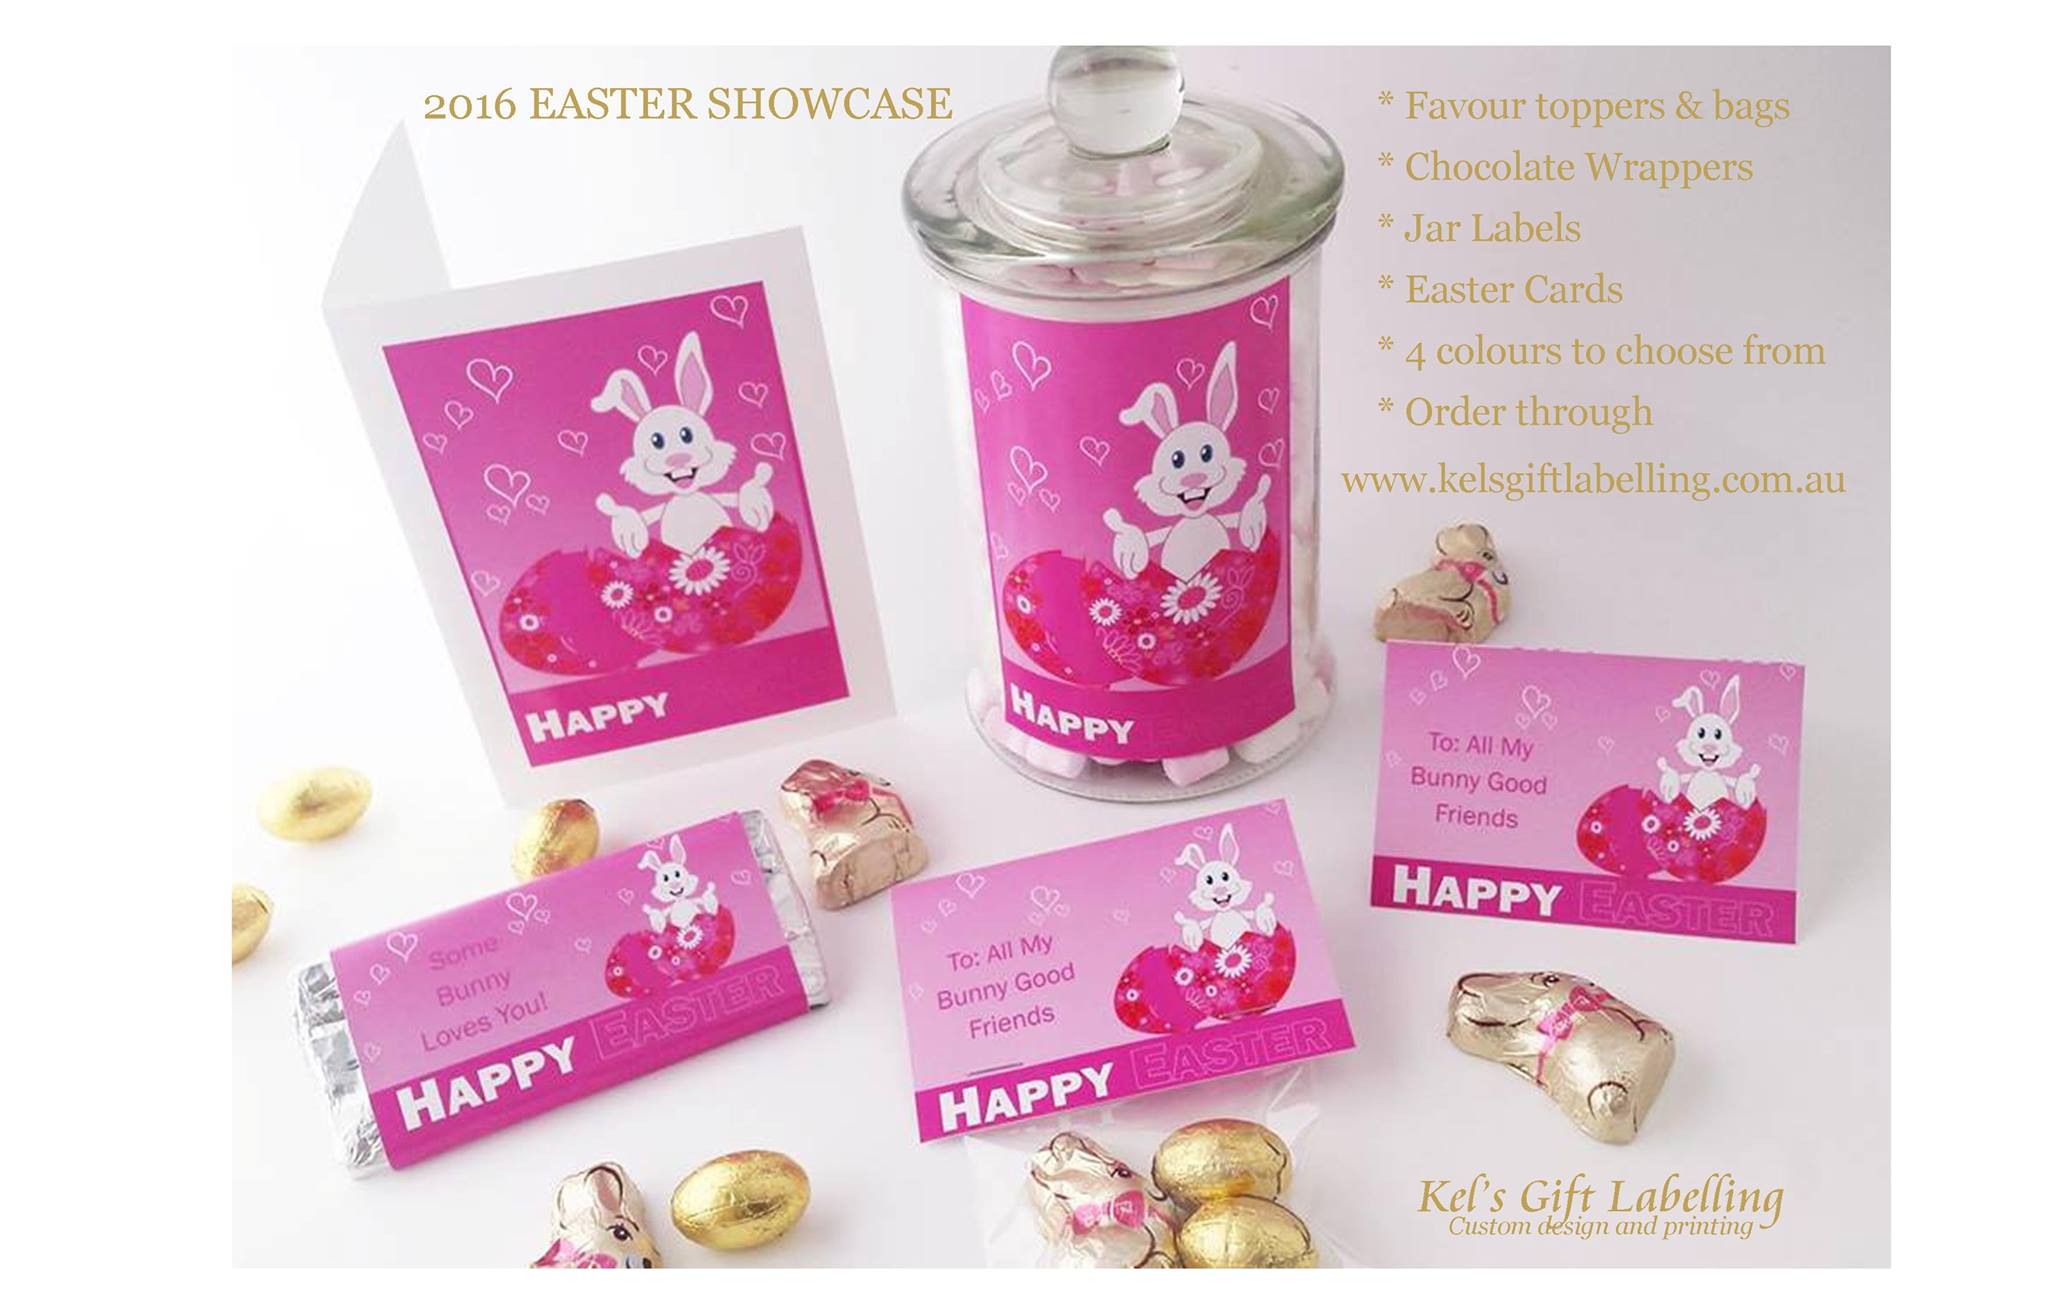 Easter gift stationery - Kel's Gift Labelling